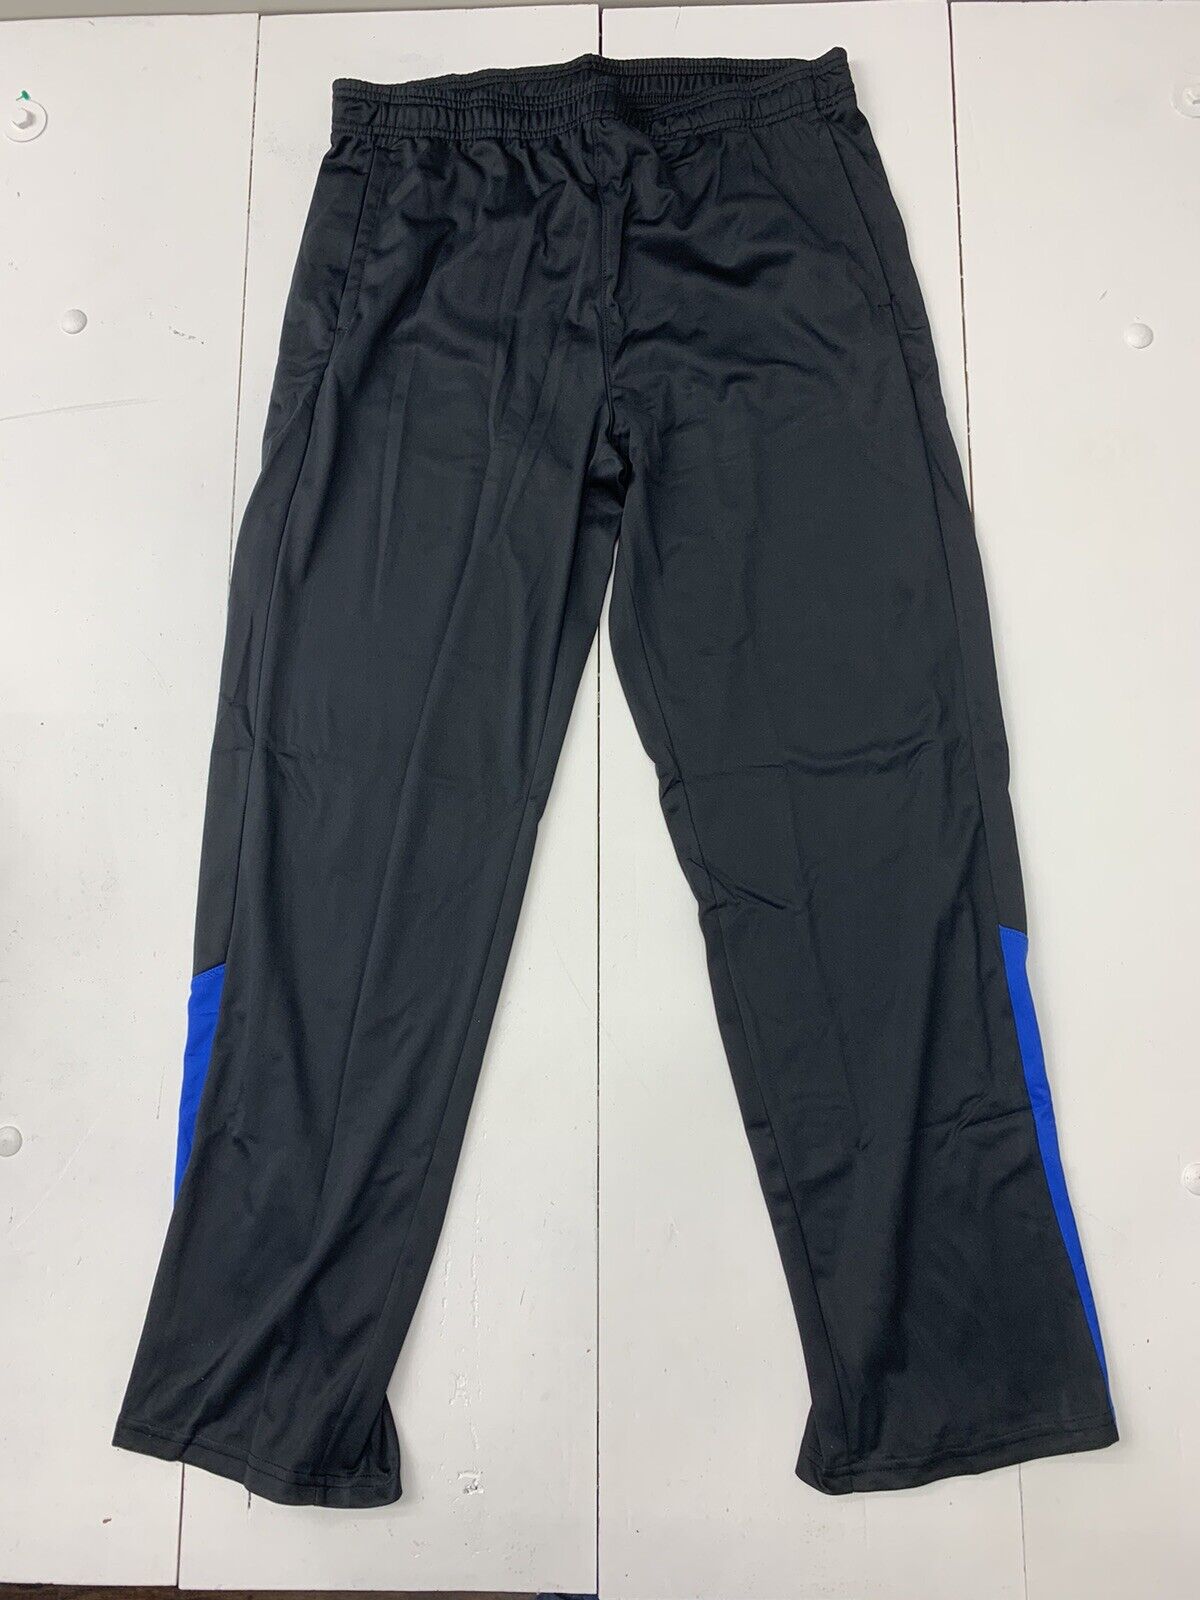 Devops Mens Black Blue Sweatpants Size XL - beyond exchange